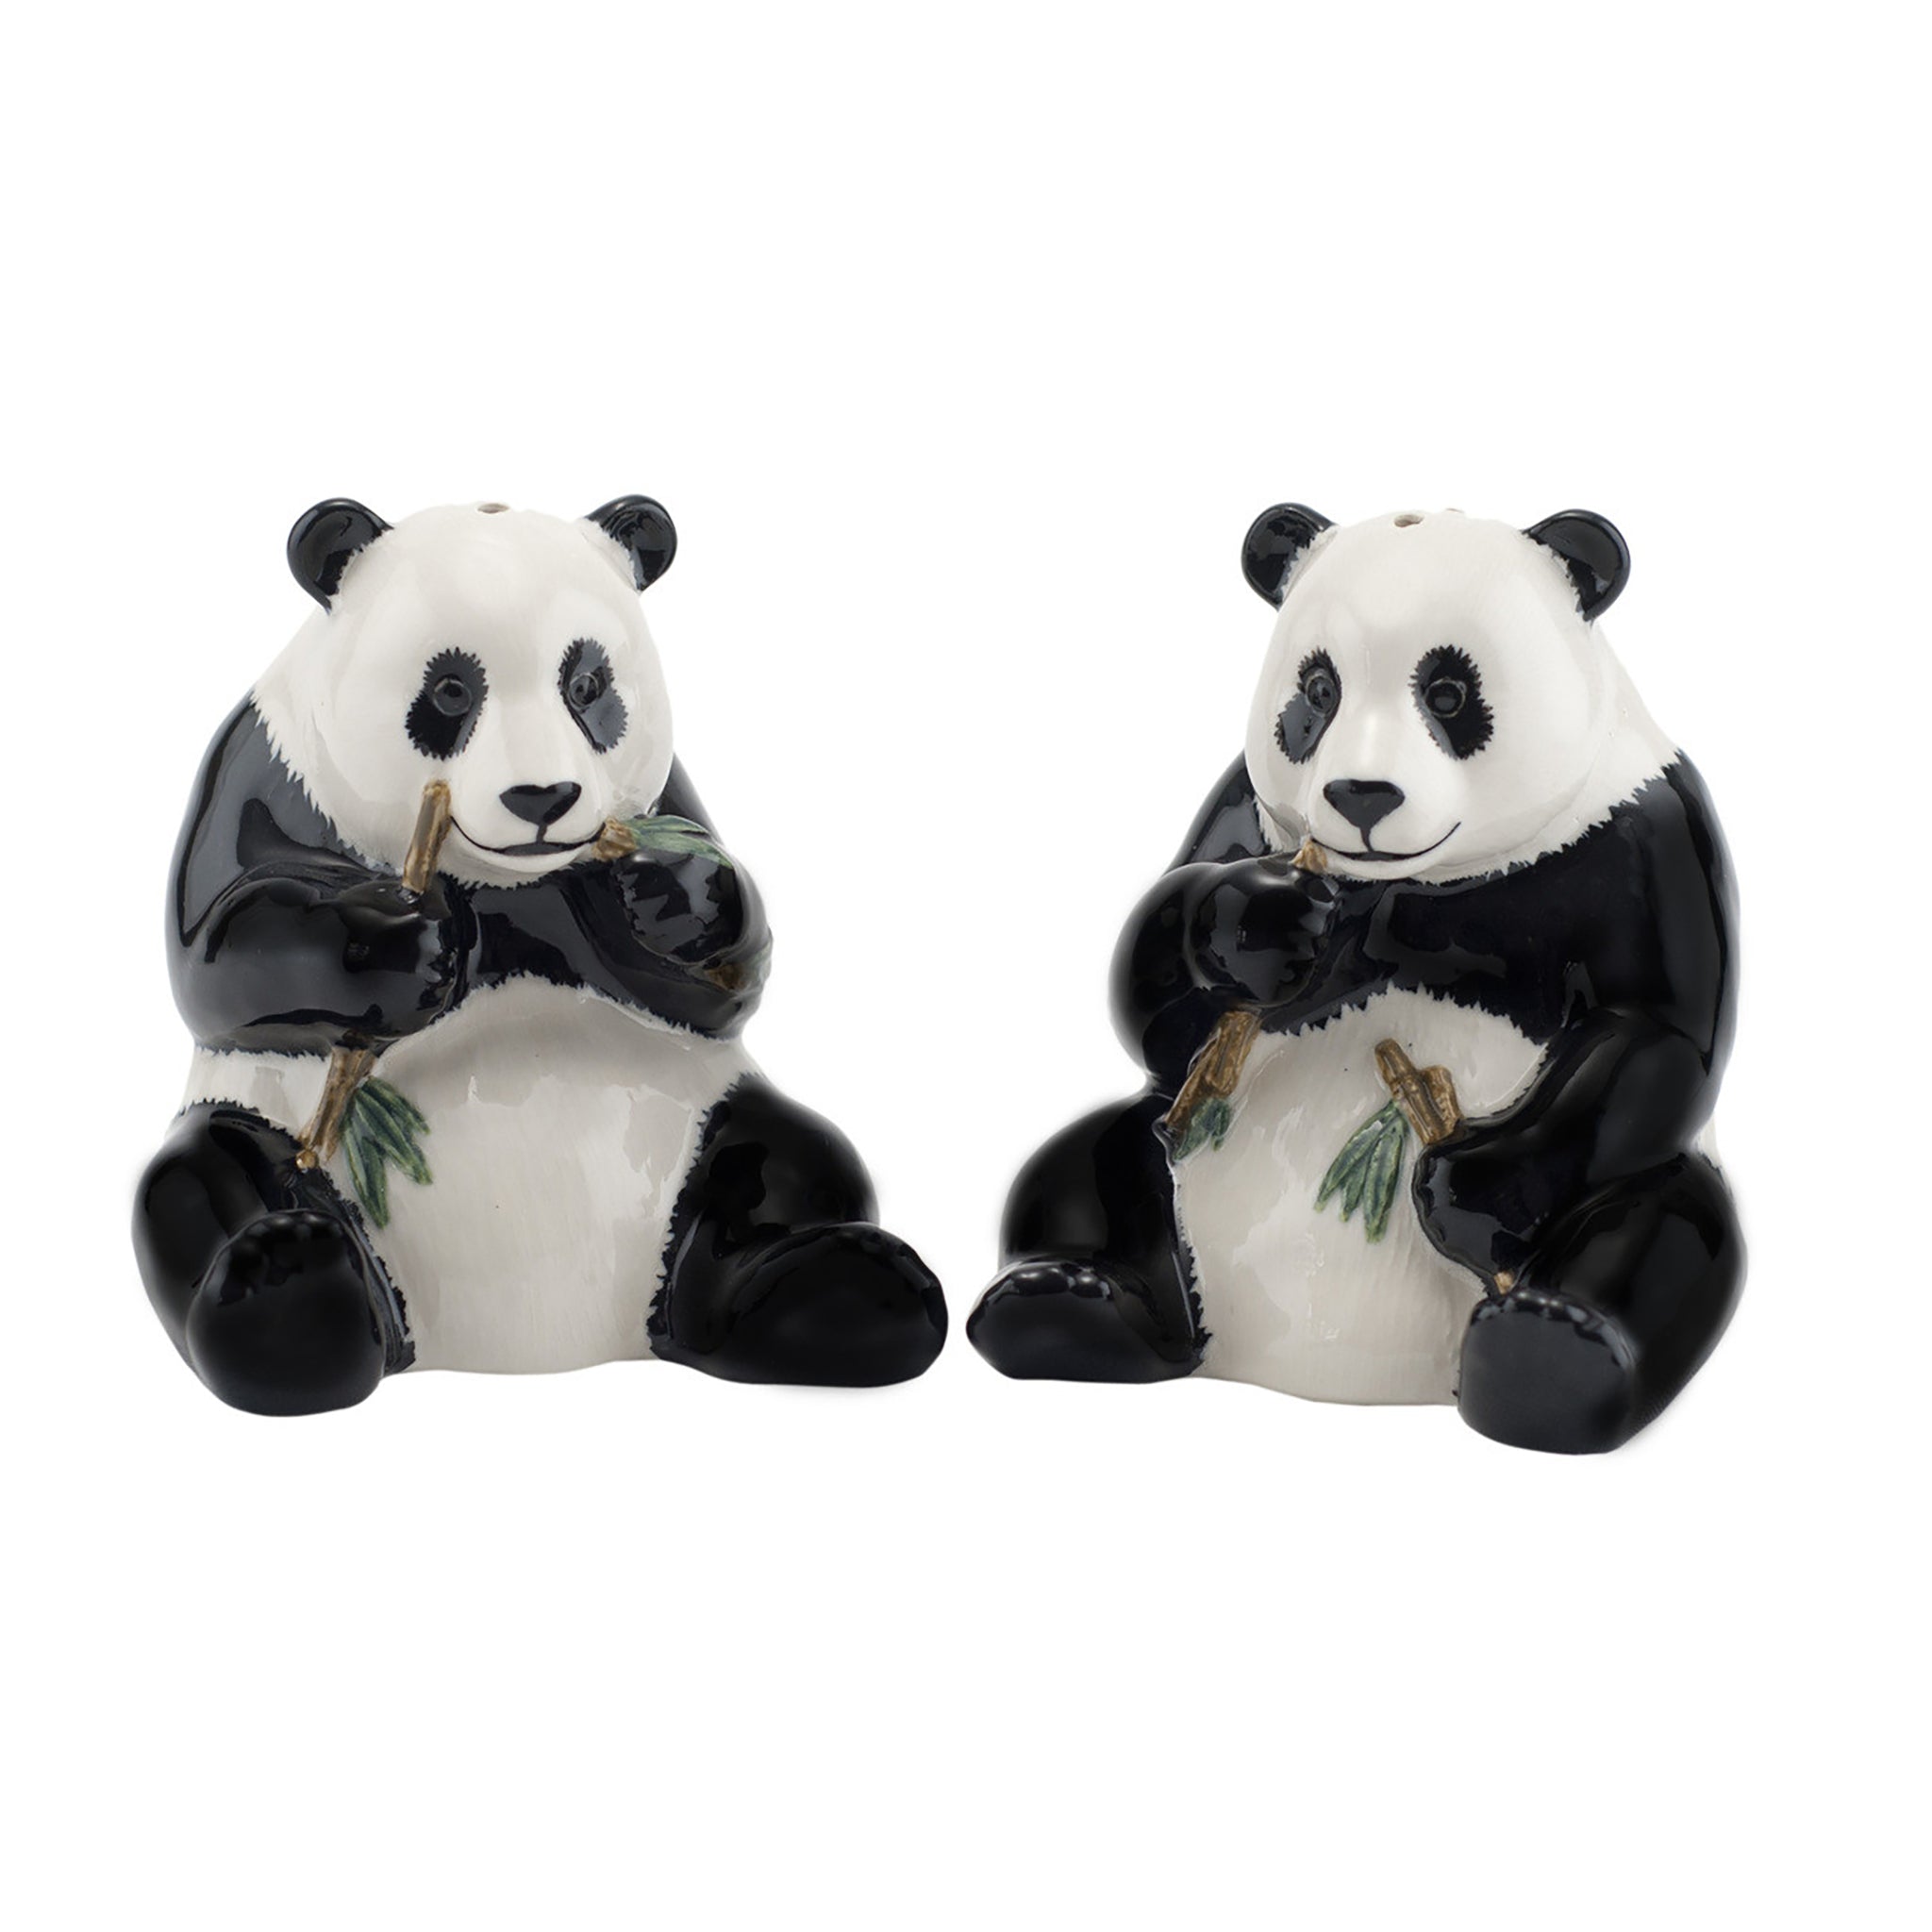 Pair of glazed salt and pepper shakers shaped like panda bears eating bamboo